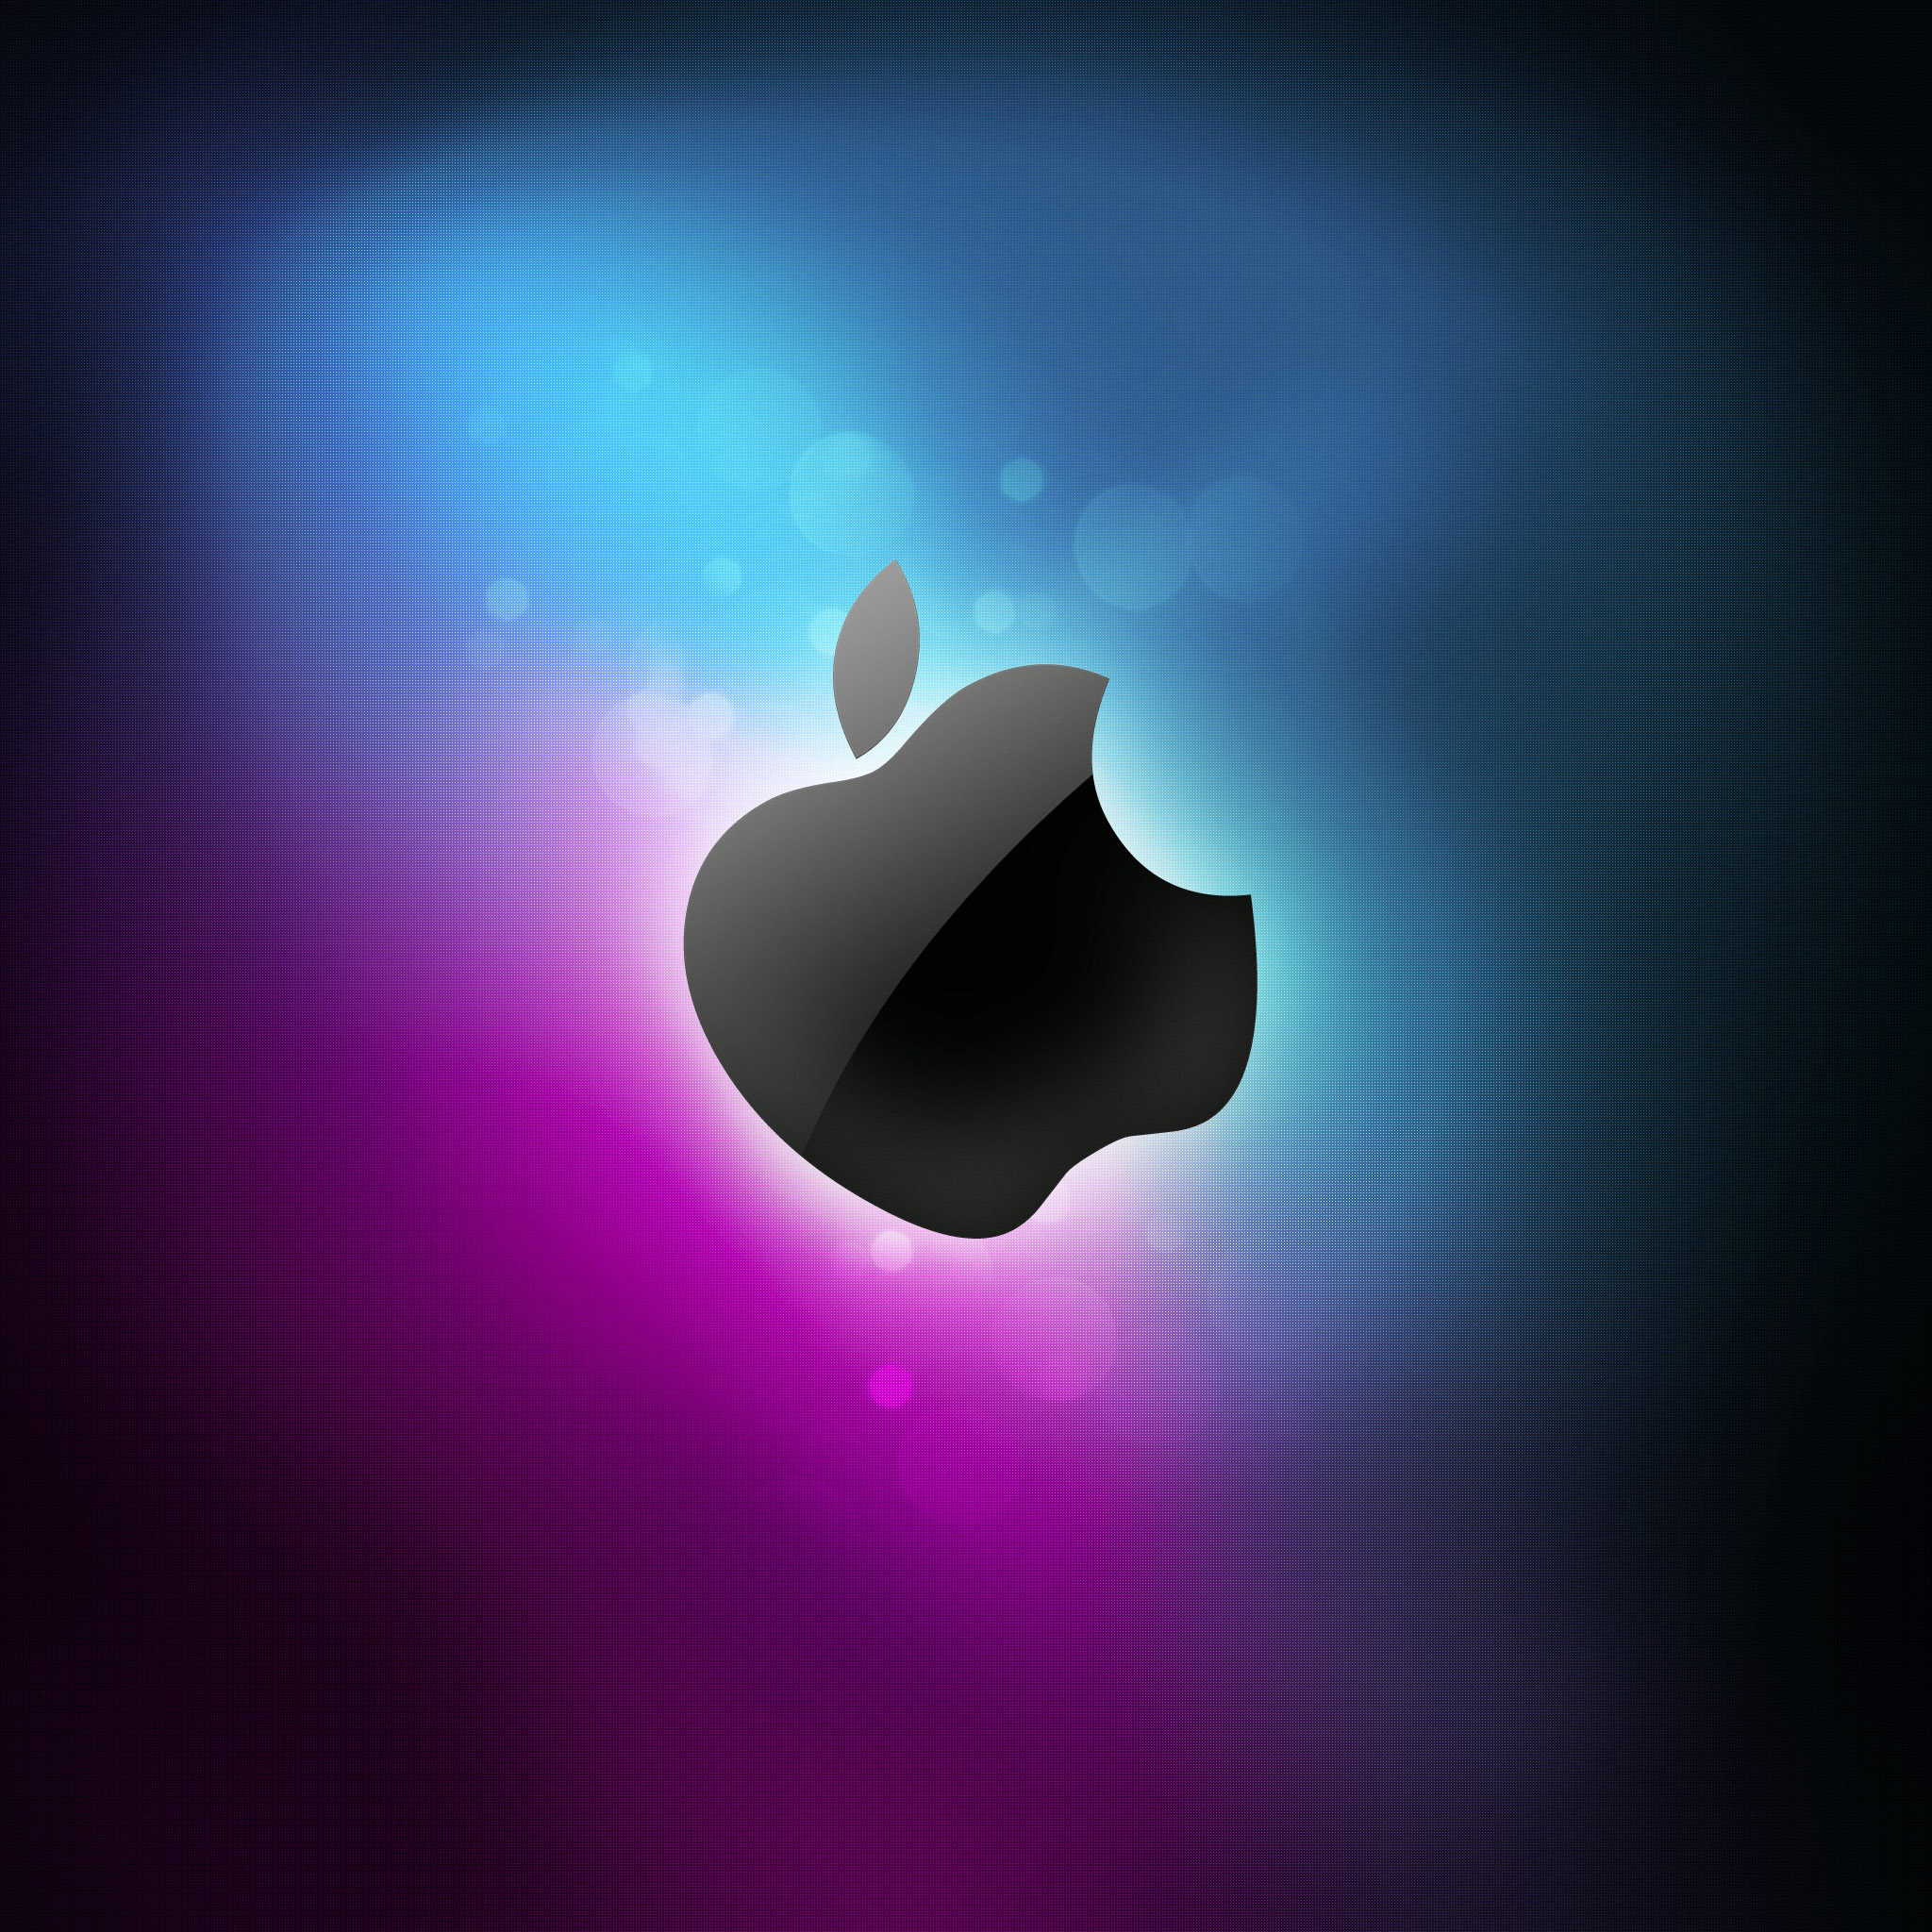 HD apple logo iPad wallpapers Cool Wallpapers For Ipad 2